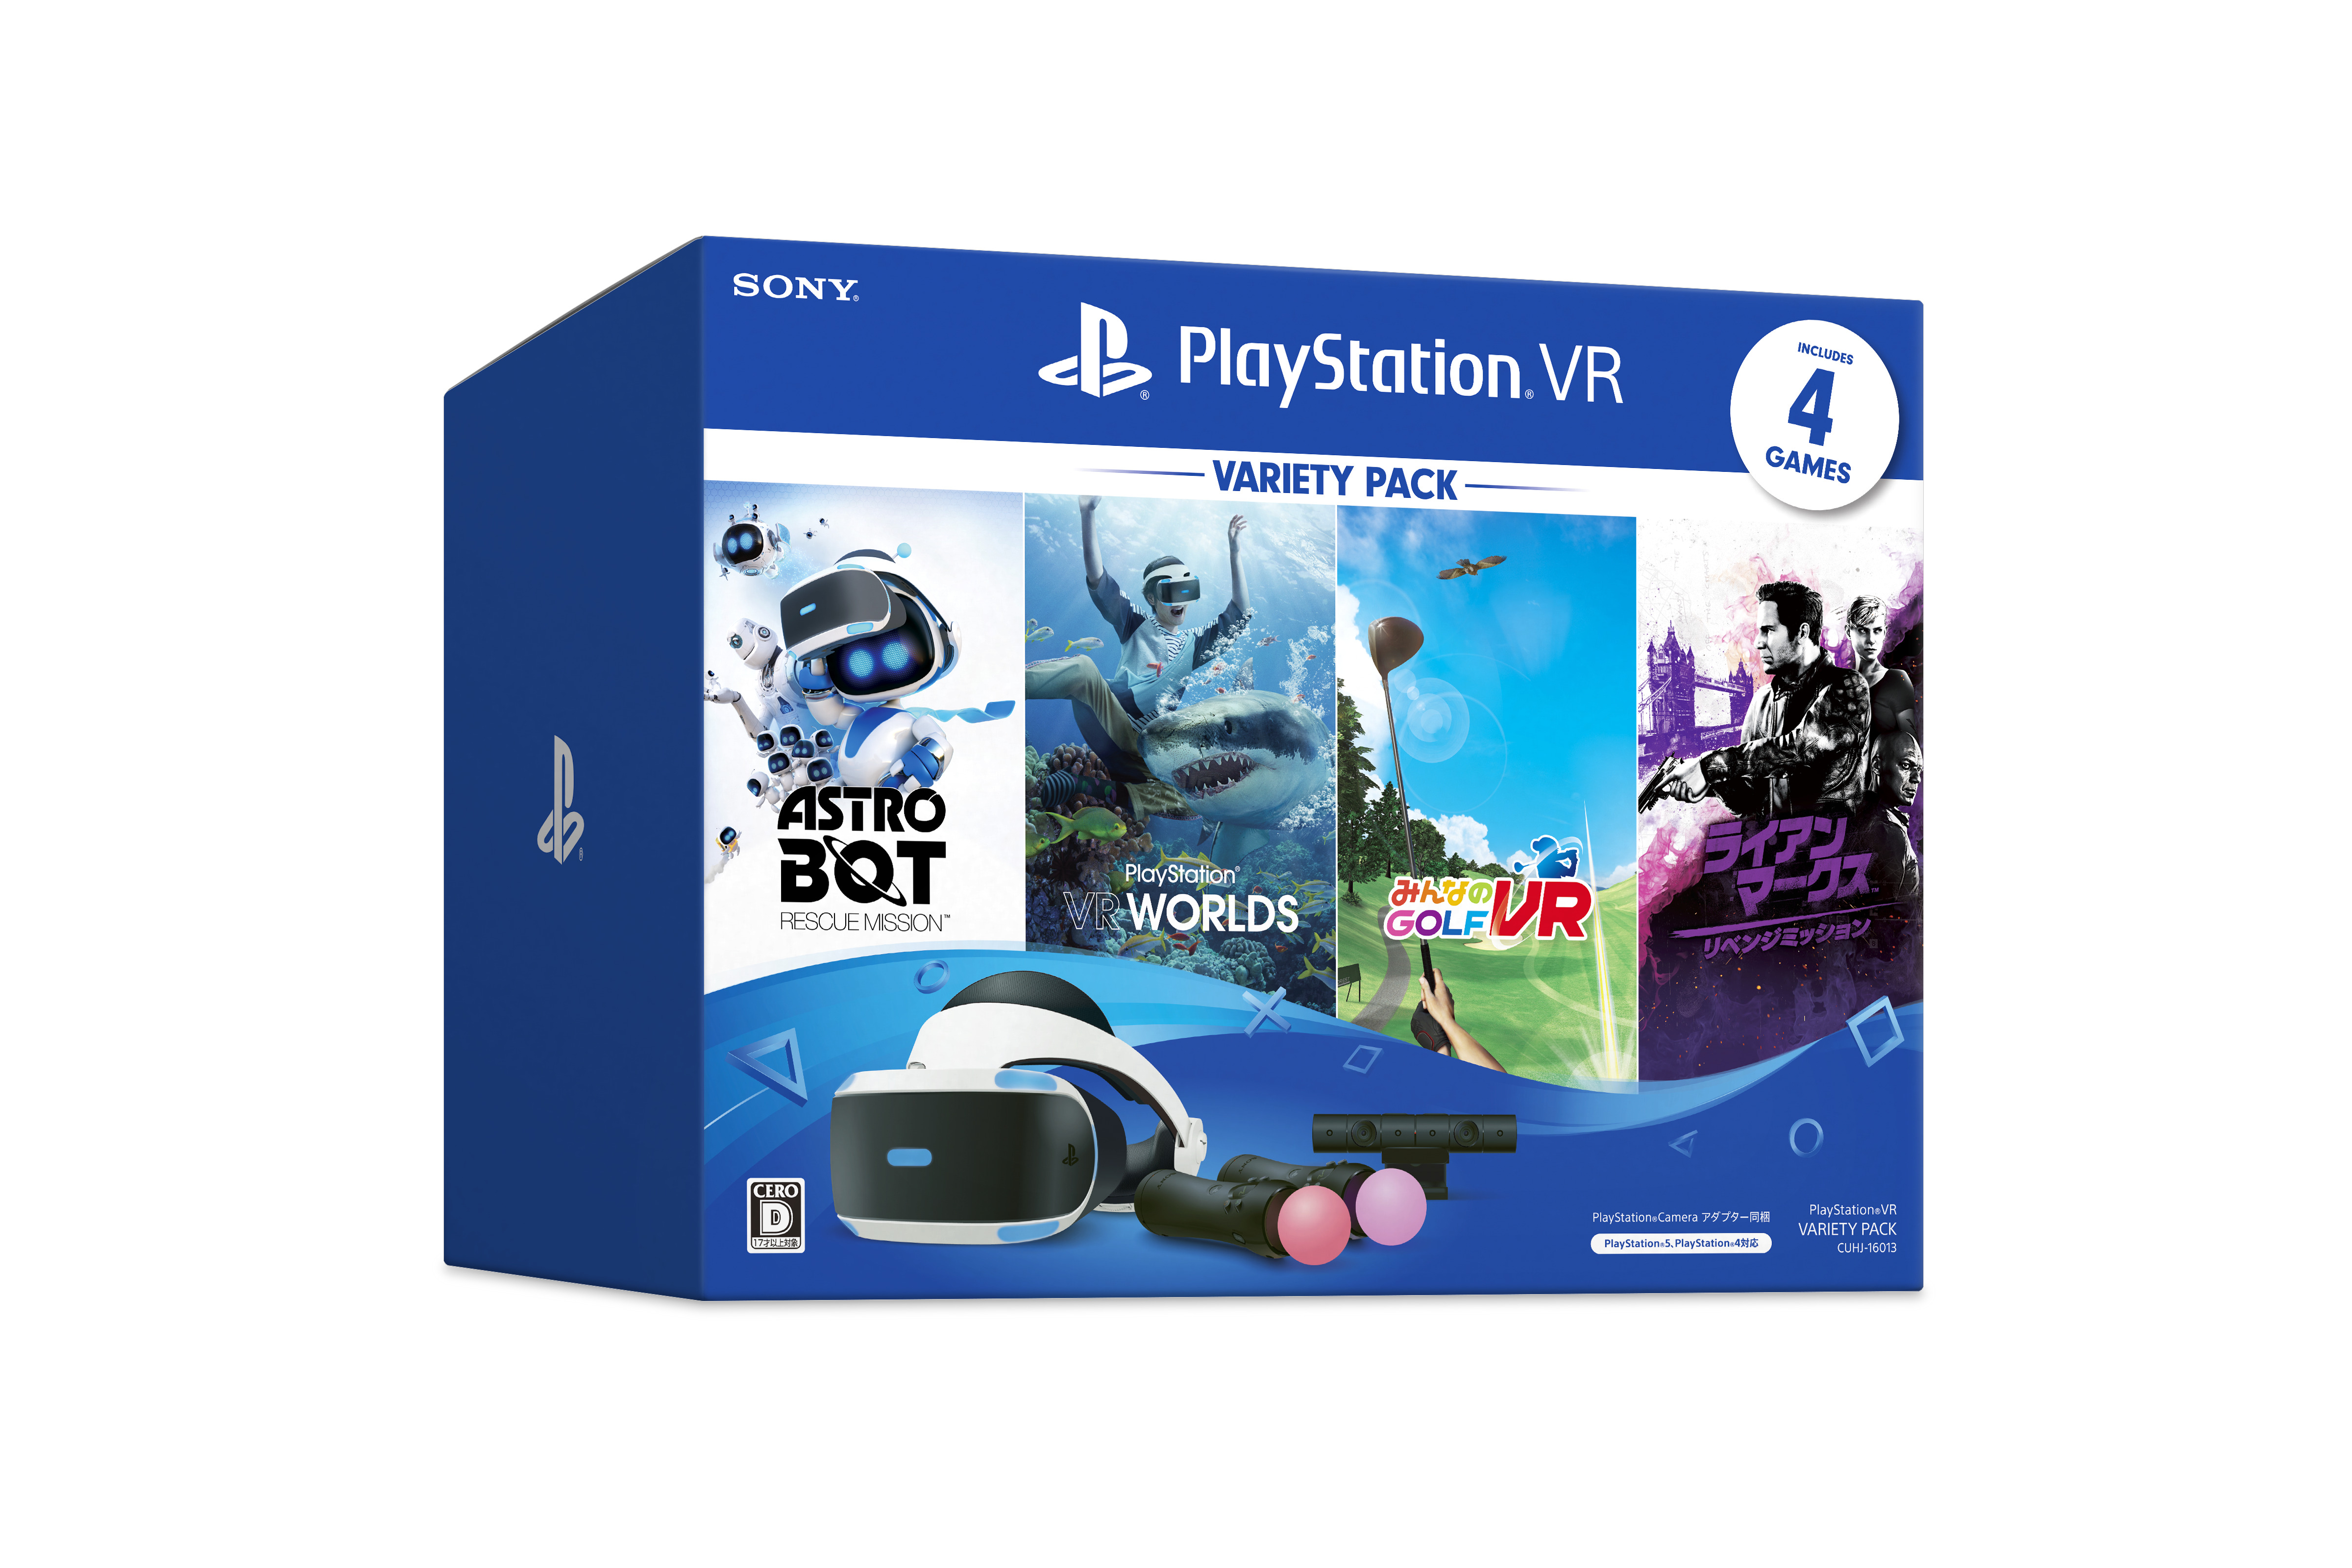 PS VRをお得に楽しむことができる「PlayStation VR Variety Pack」が10